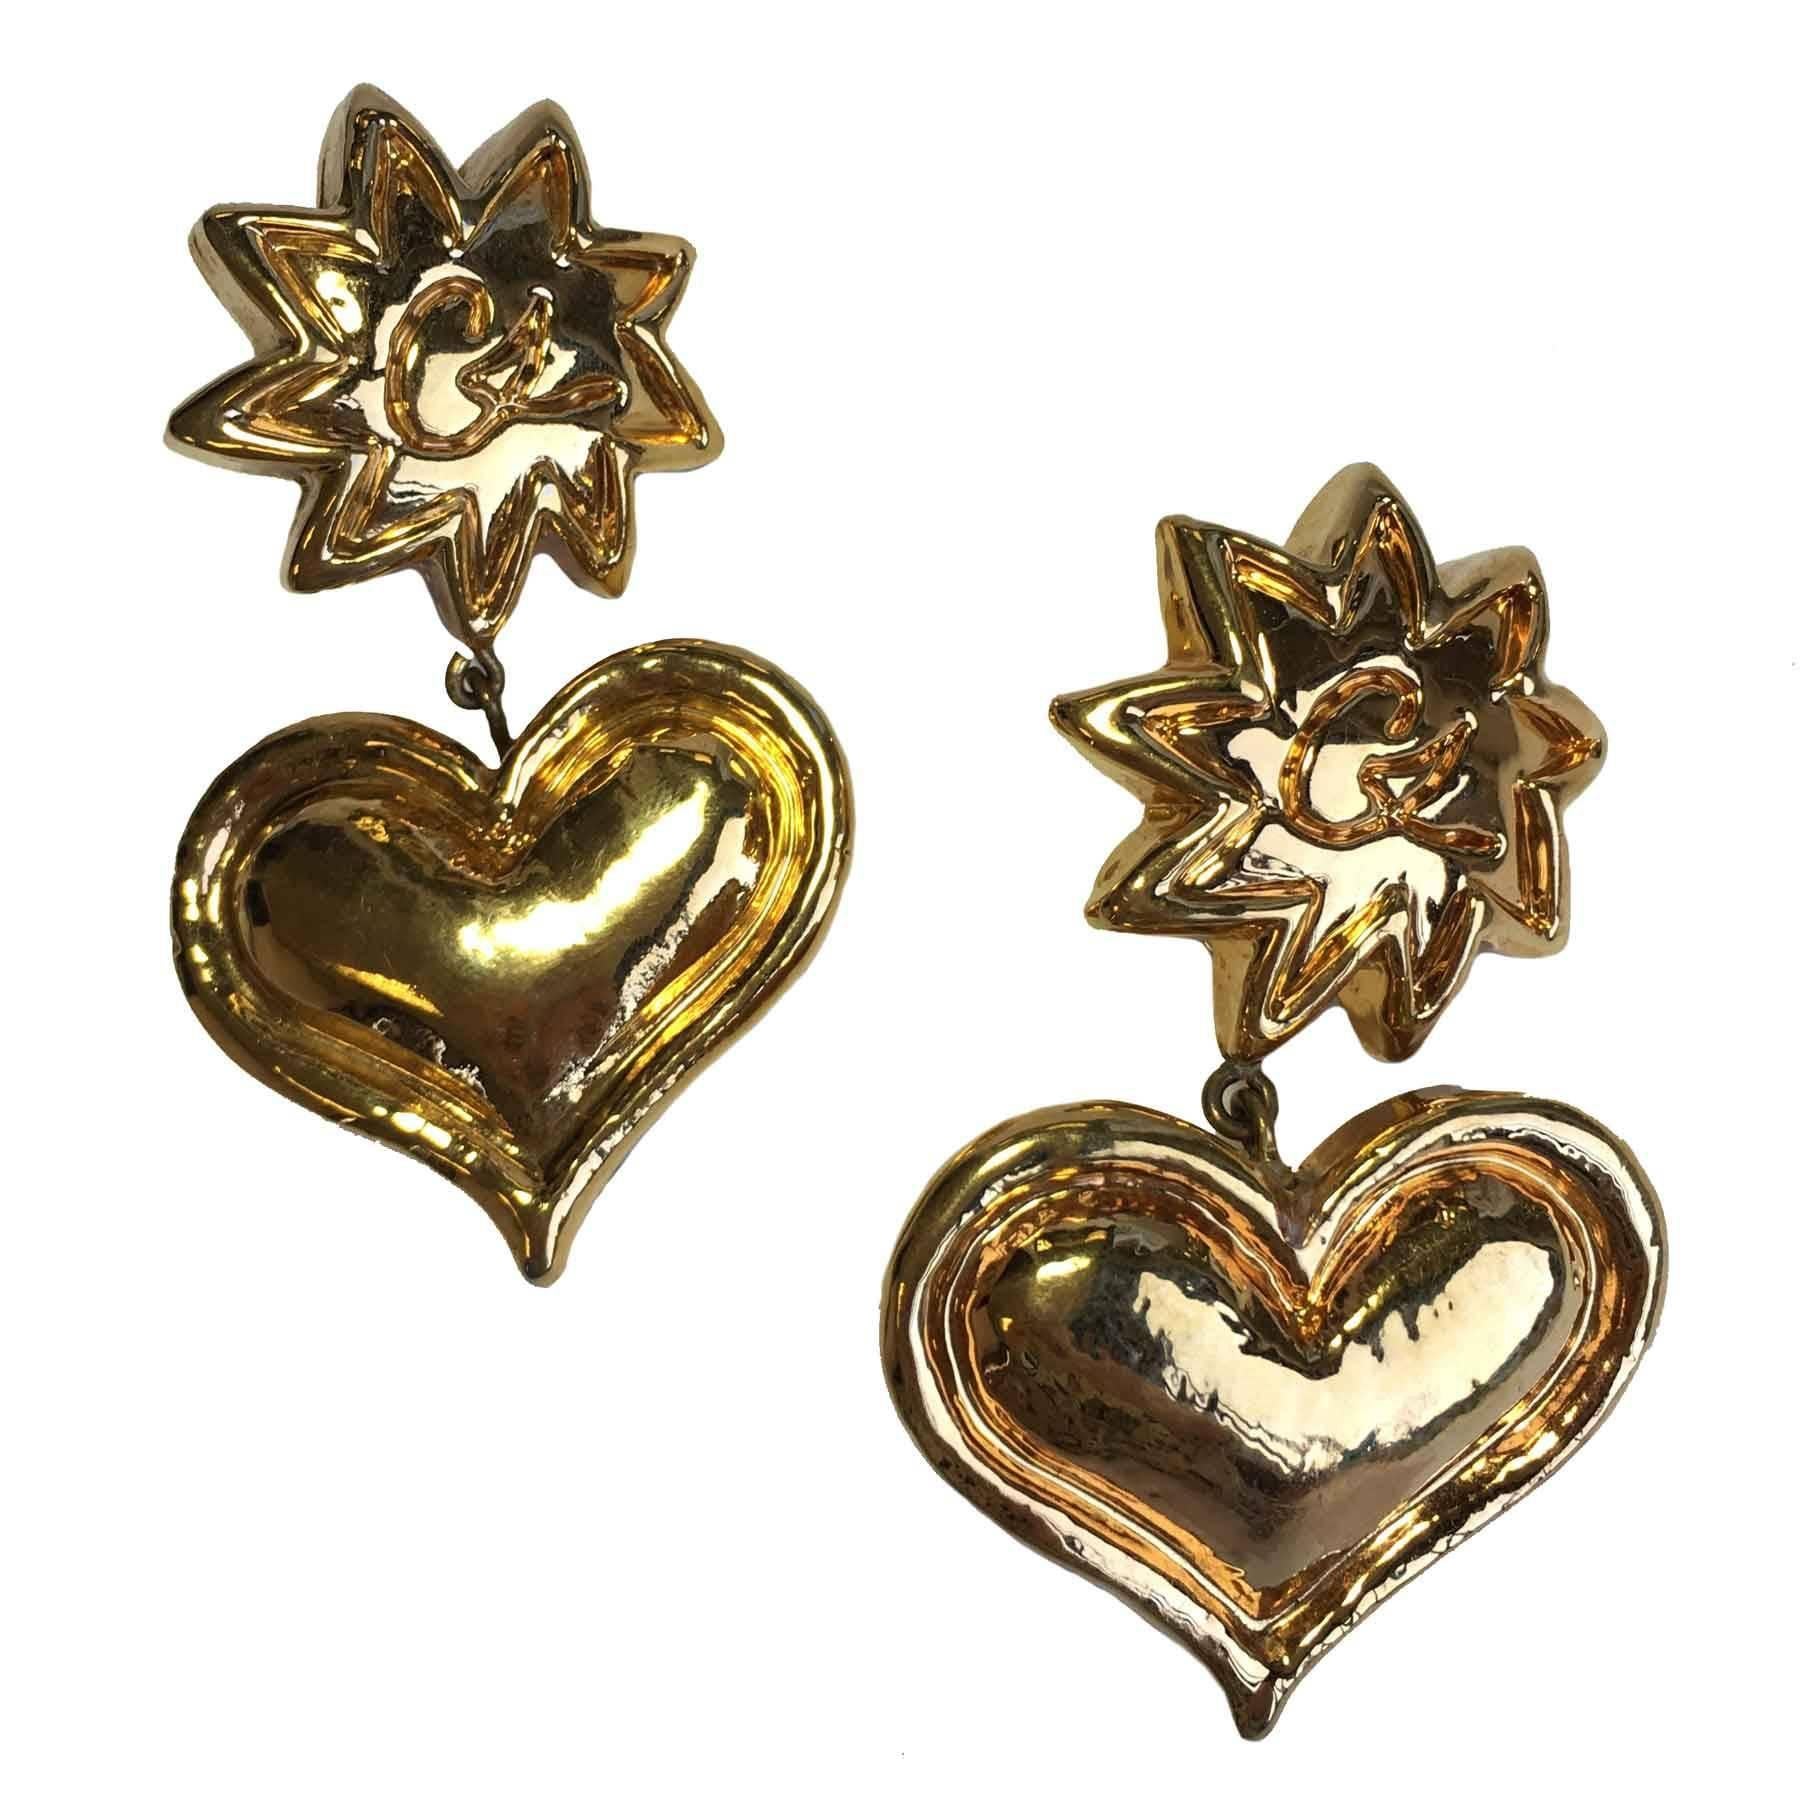 Vintage CHRISTIAN LCROIX Heart Pendant Clip-on Earrings in Gilt Metal